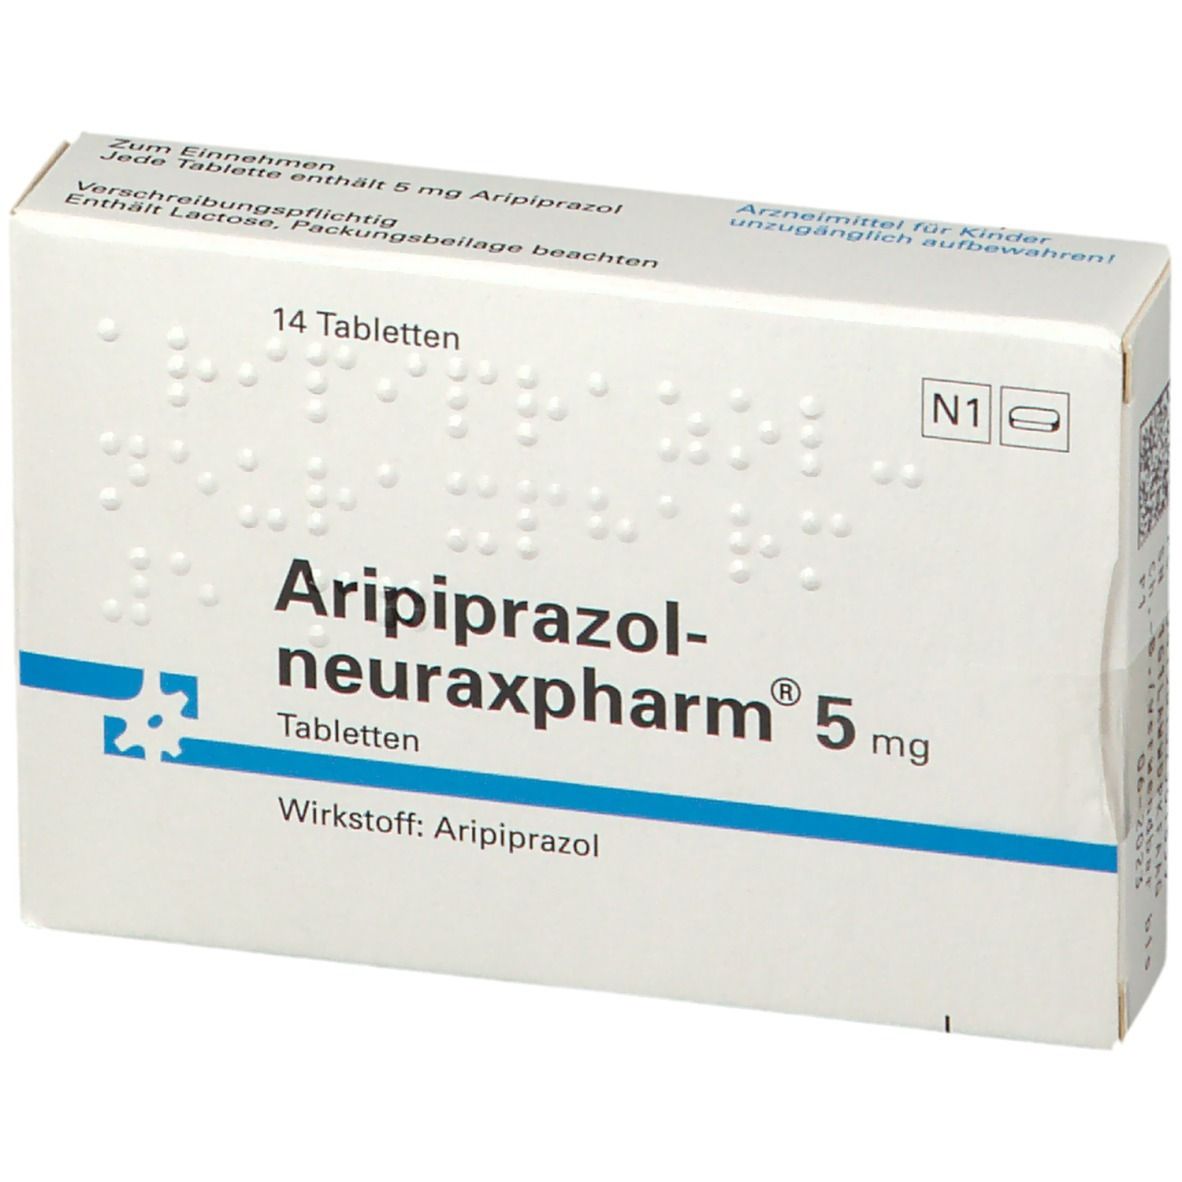 Aripiprazol-neuraxpharm® 5 mg